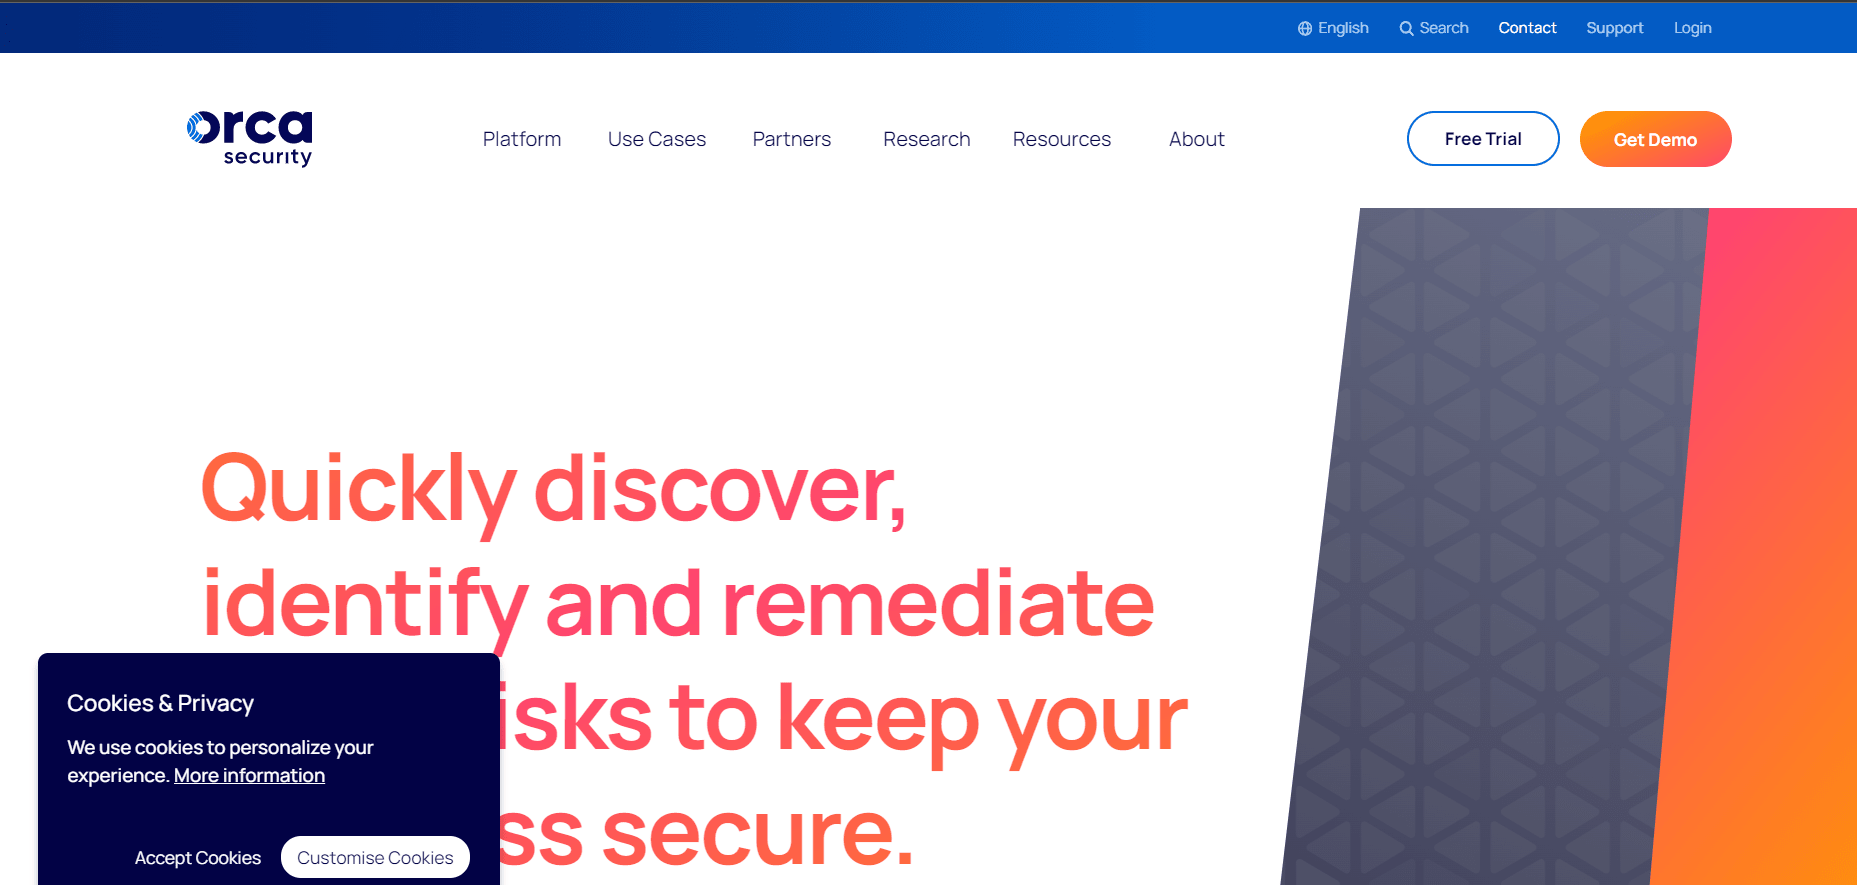 orca security website screenshot 